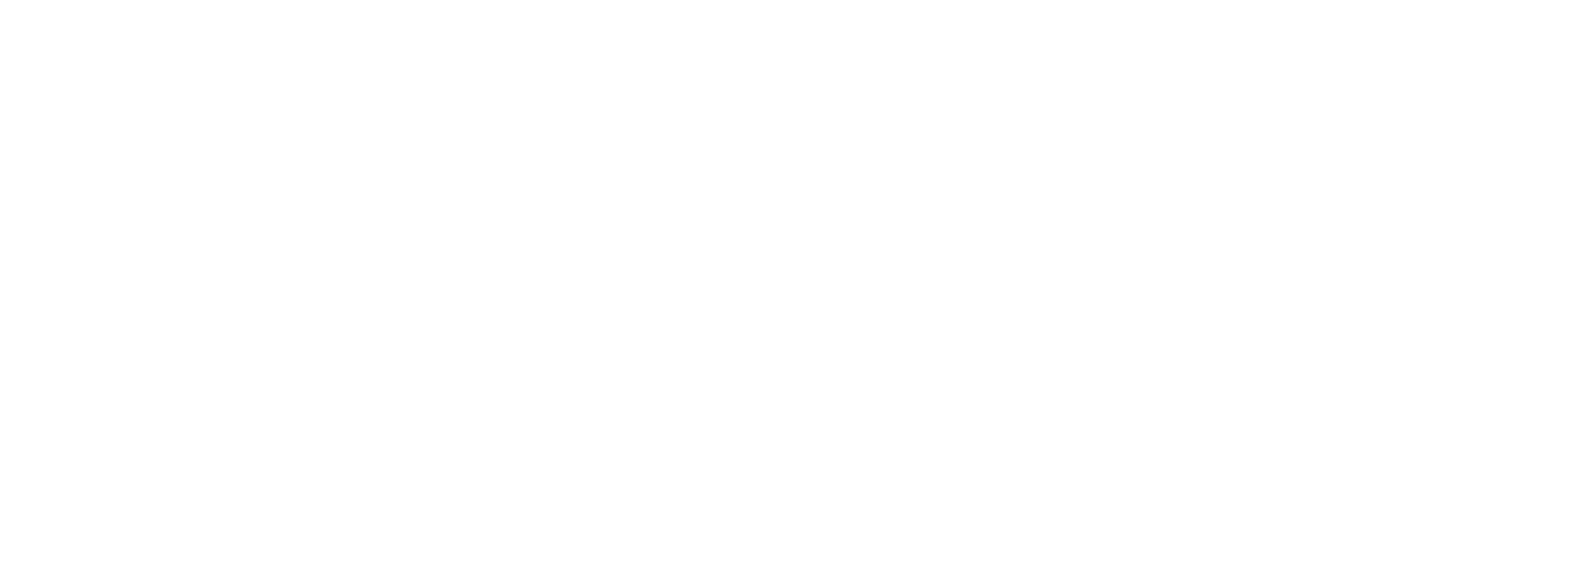 Burmese News